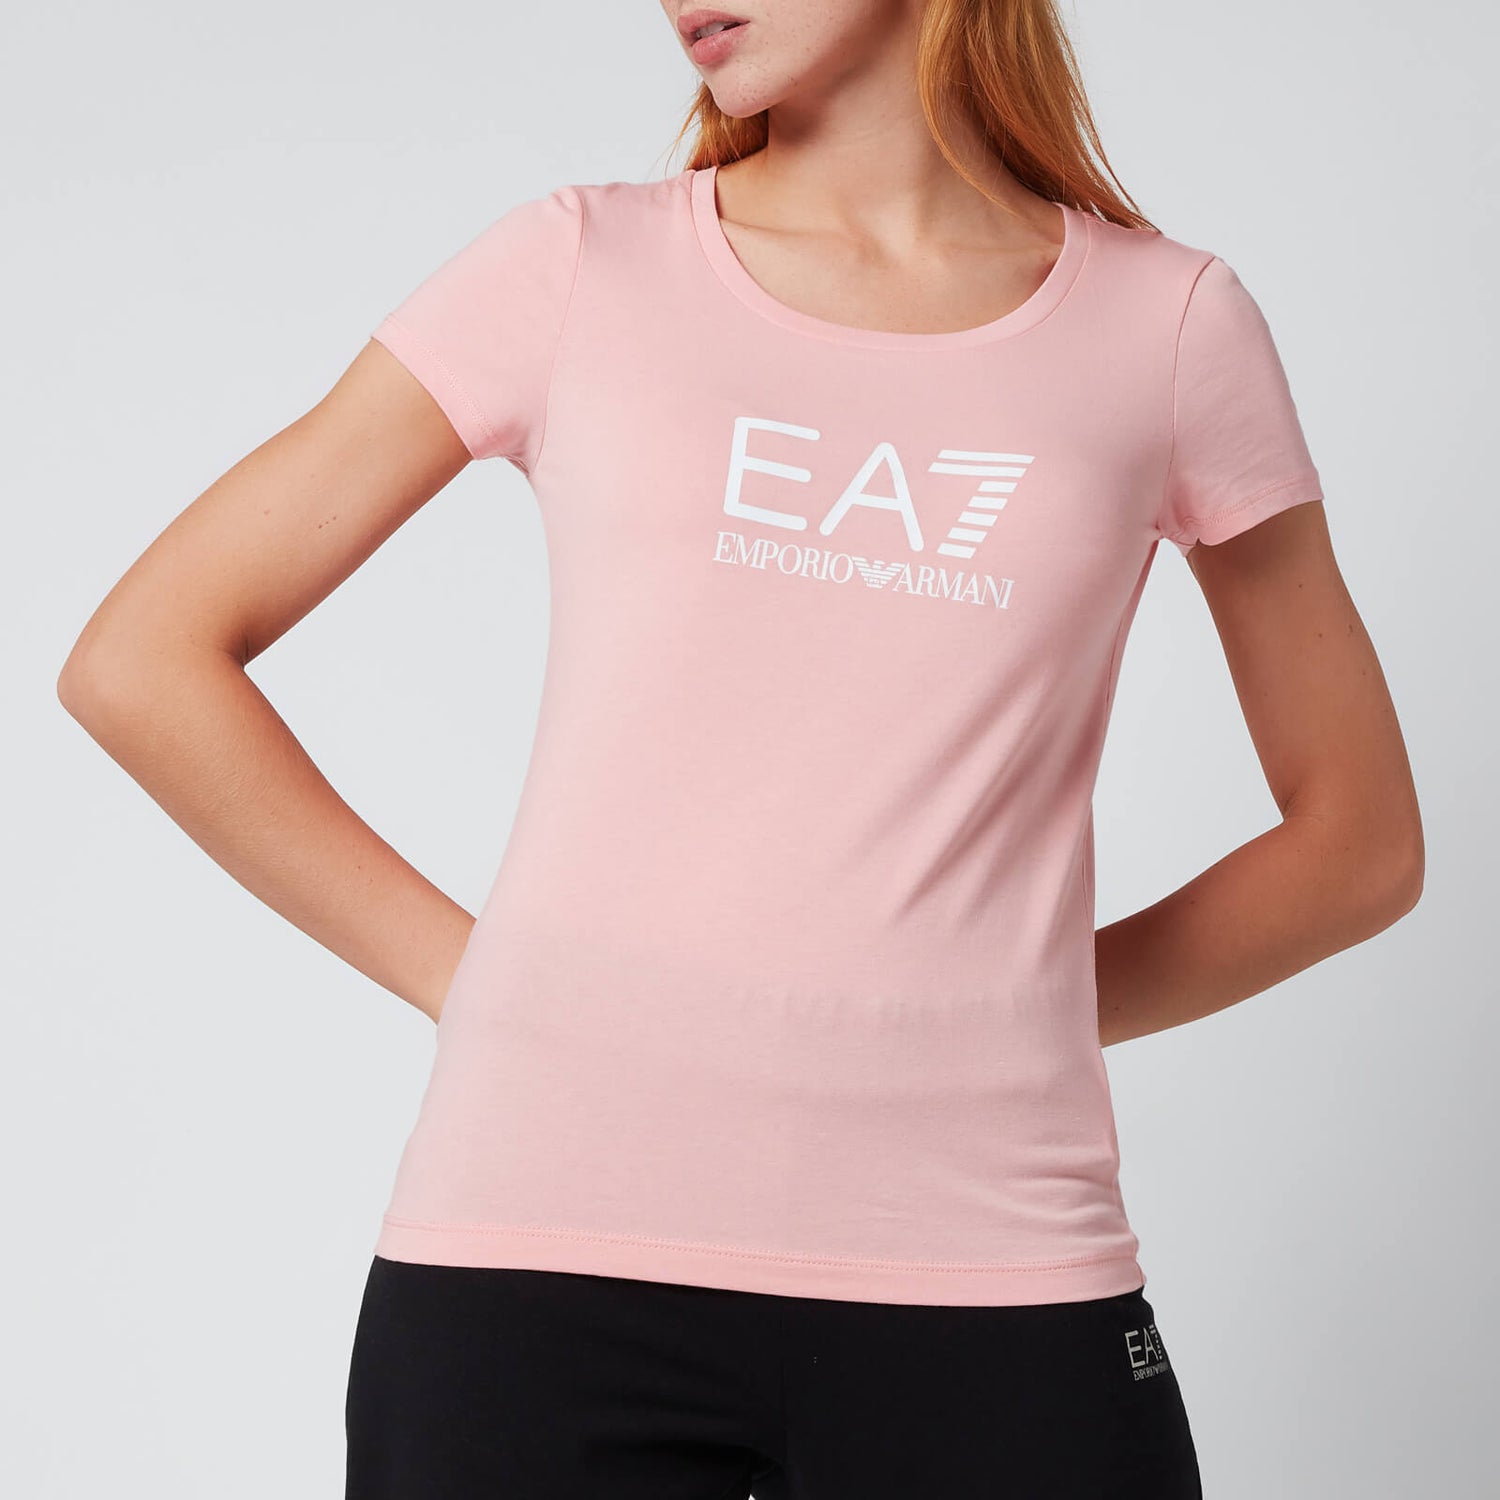 Emporio Armani EA7 Women's Train Shiny T-Shirt - Quartz Pink/White